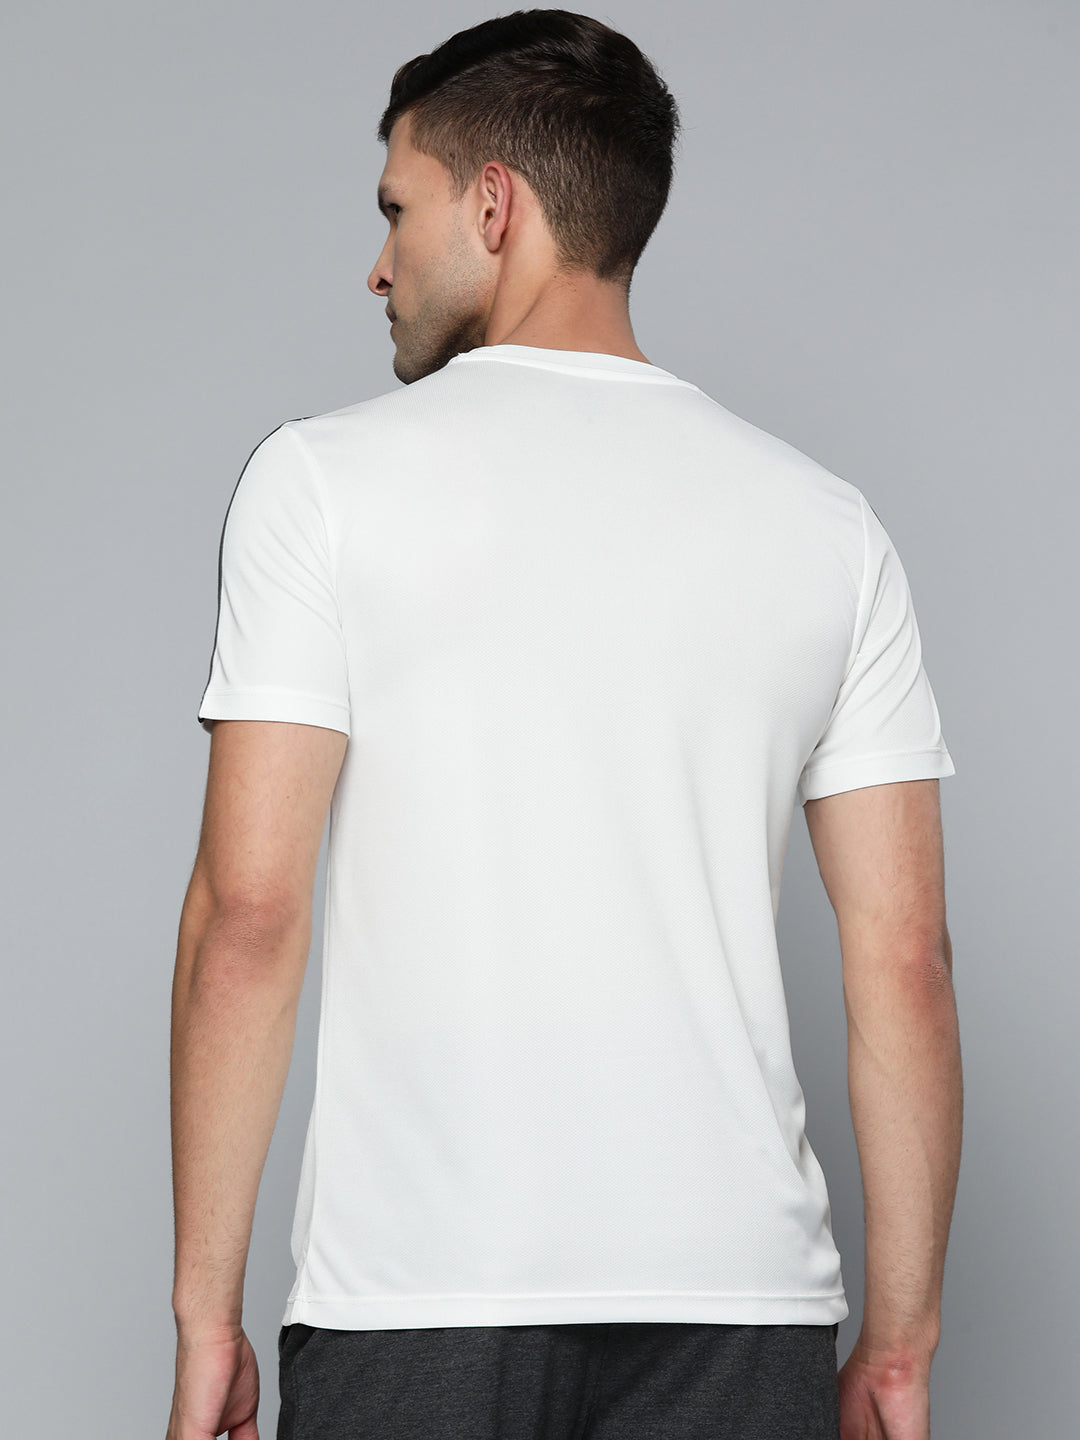 Alcis Men White & Grey Striped Slim Fit T-shirt